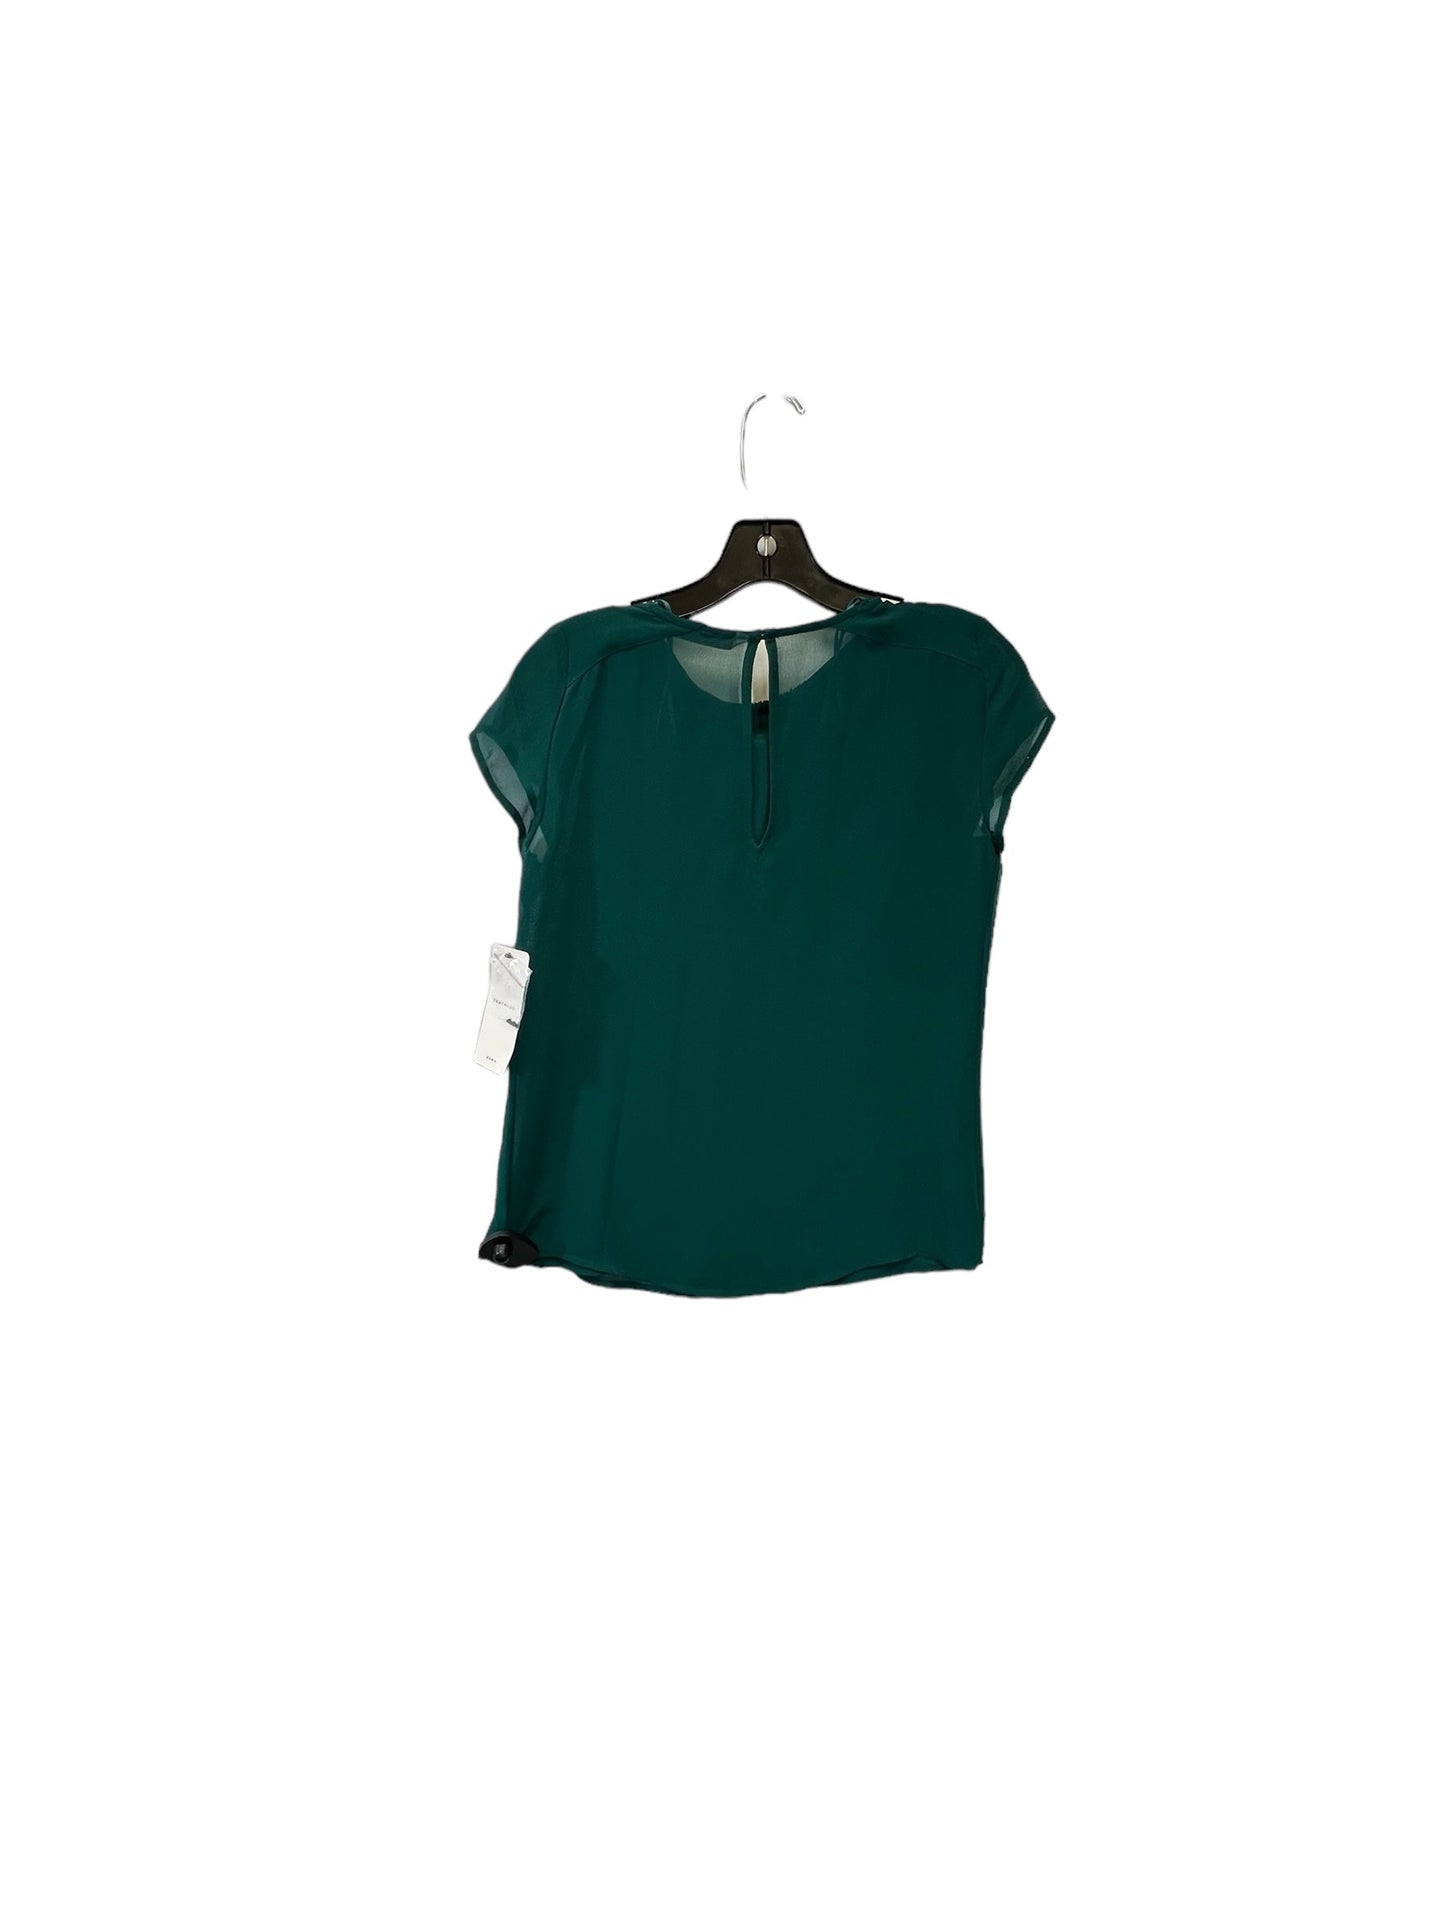 Green Top Short Sleeve Zara, Size Xs